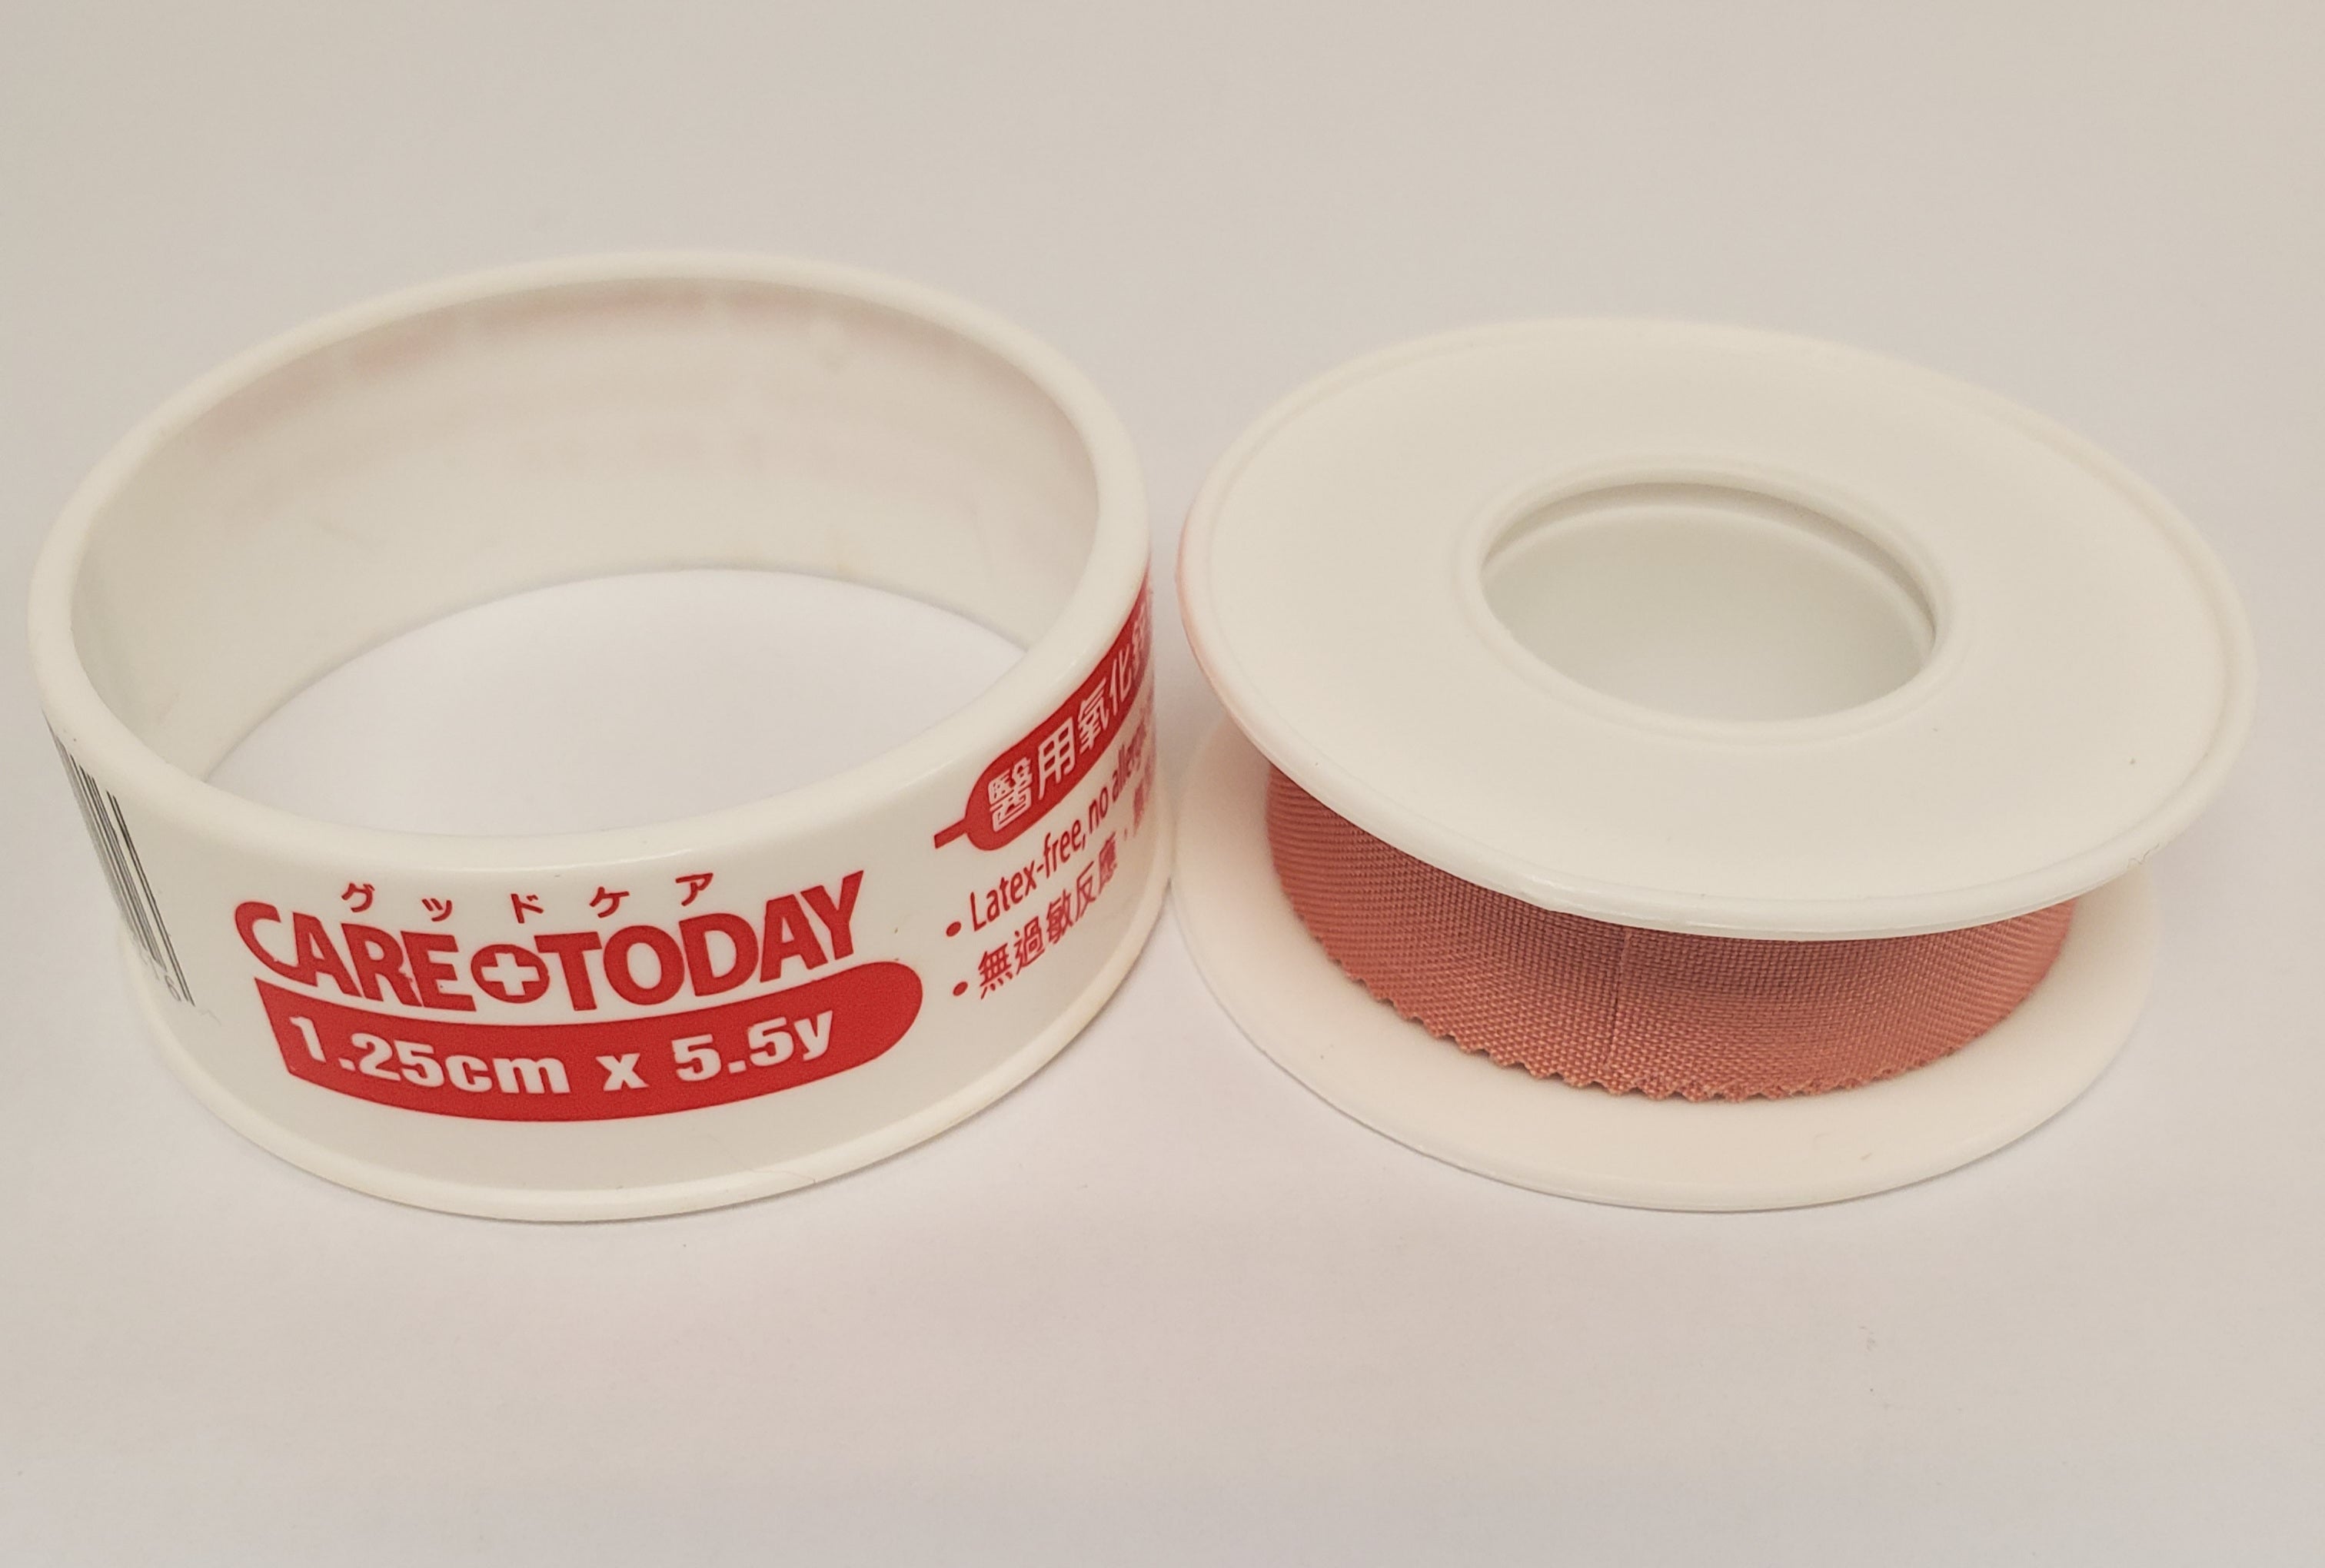 CareToday Zinc Oxide Silk Adhesive Tape (Flesh) - 1.25cm X 5.5y